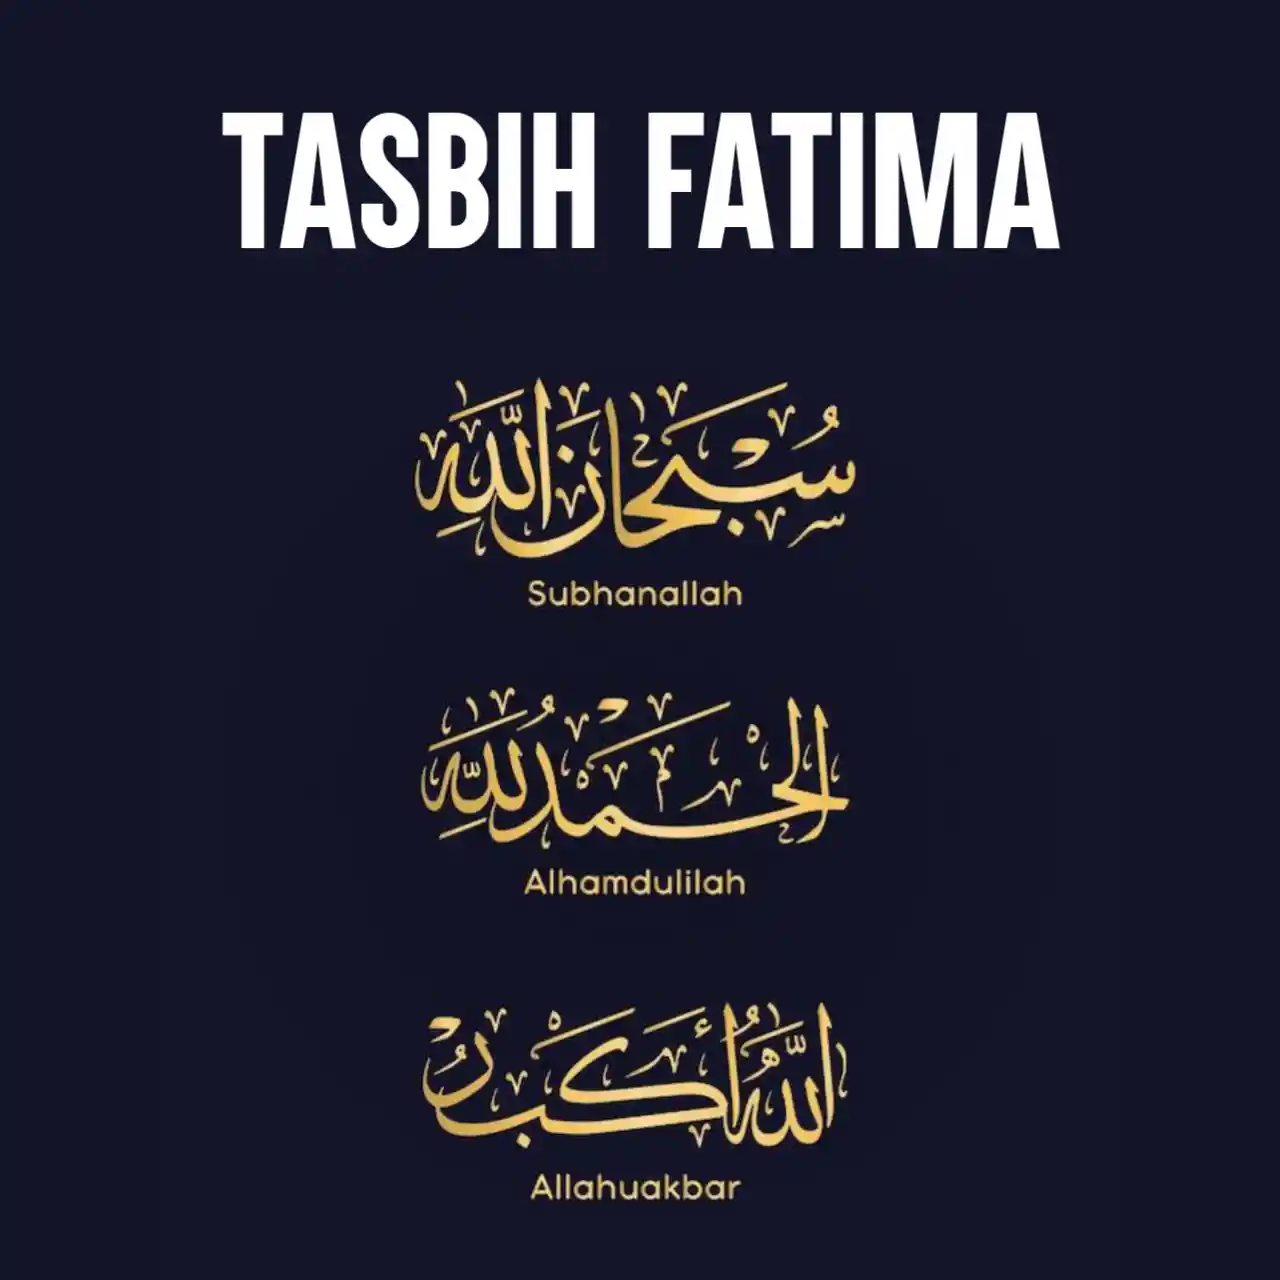 Tasbih Fatima Benefits